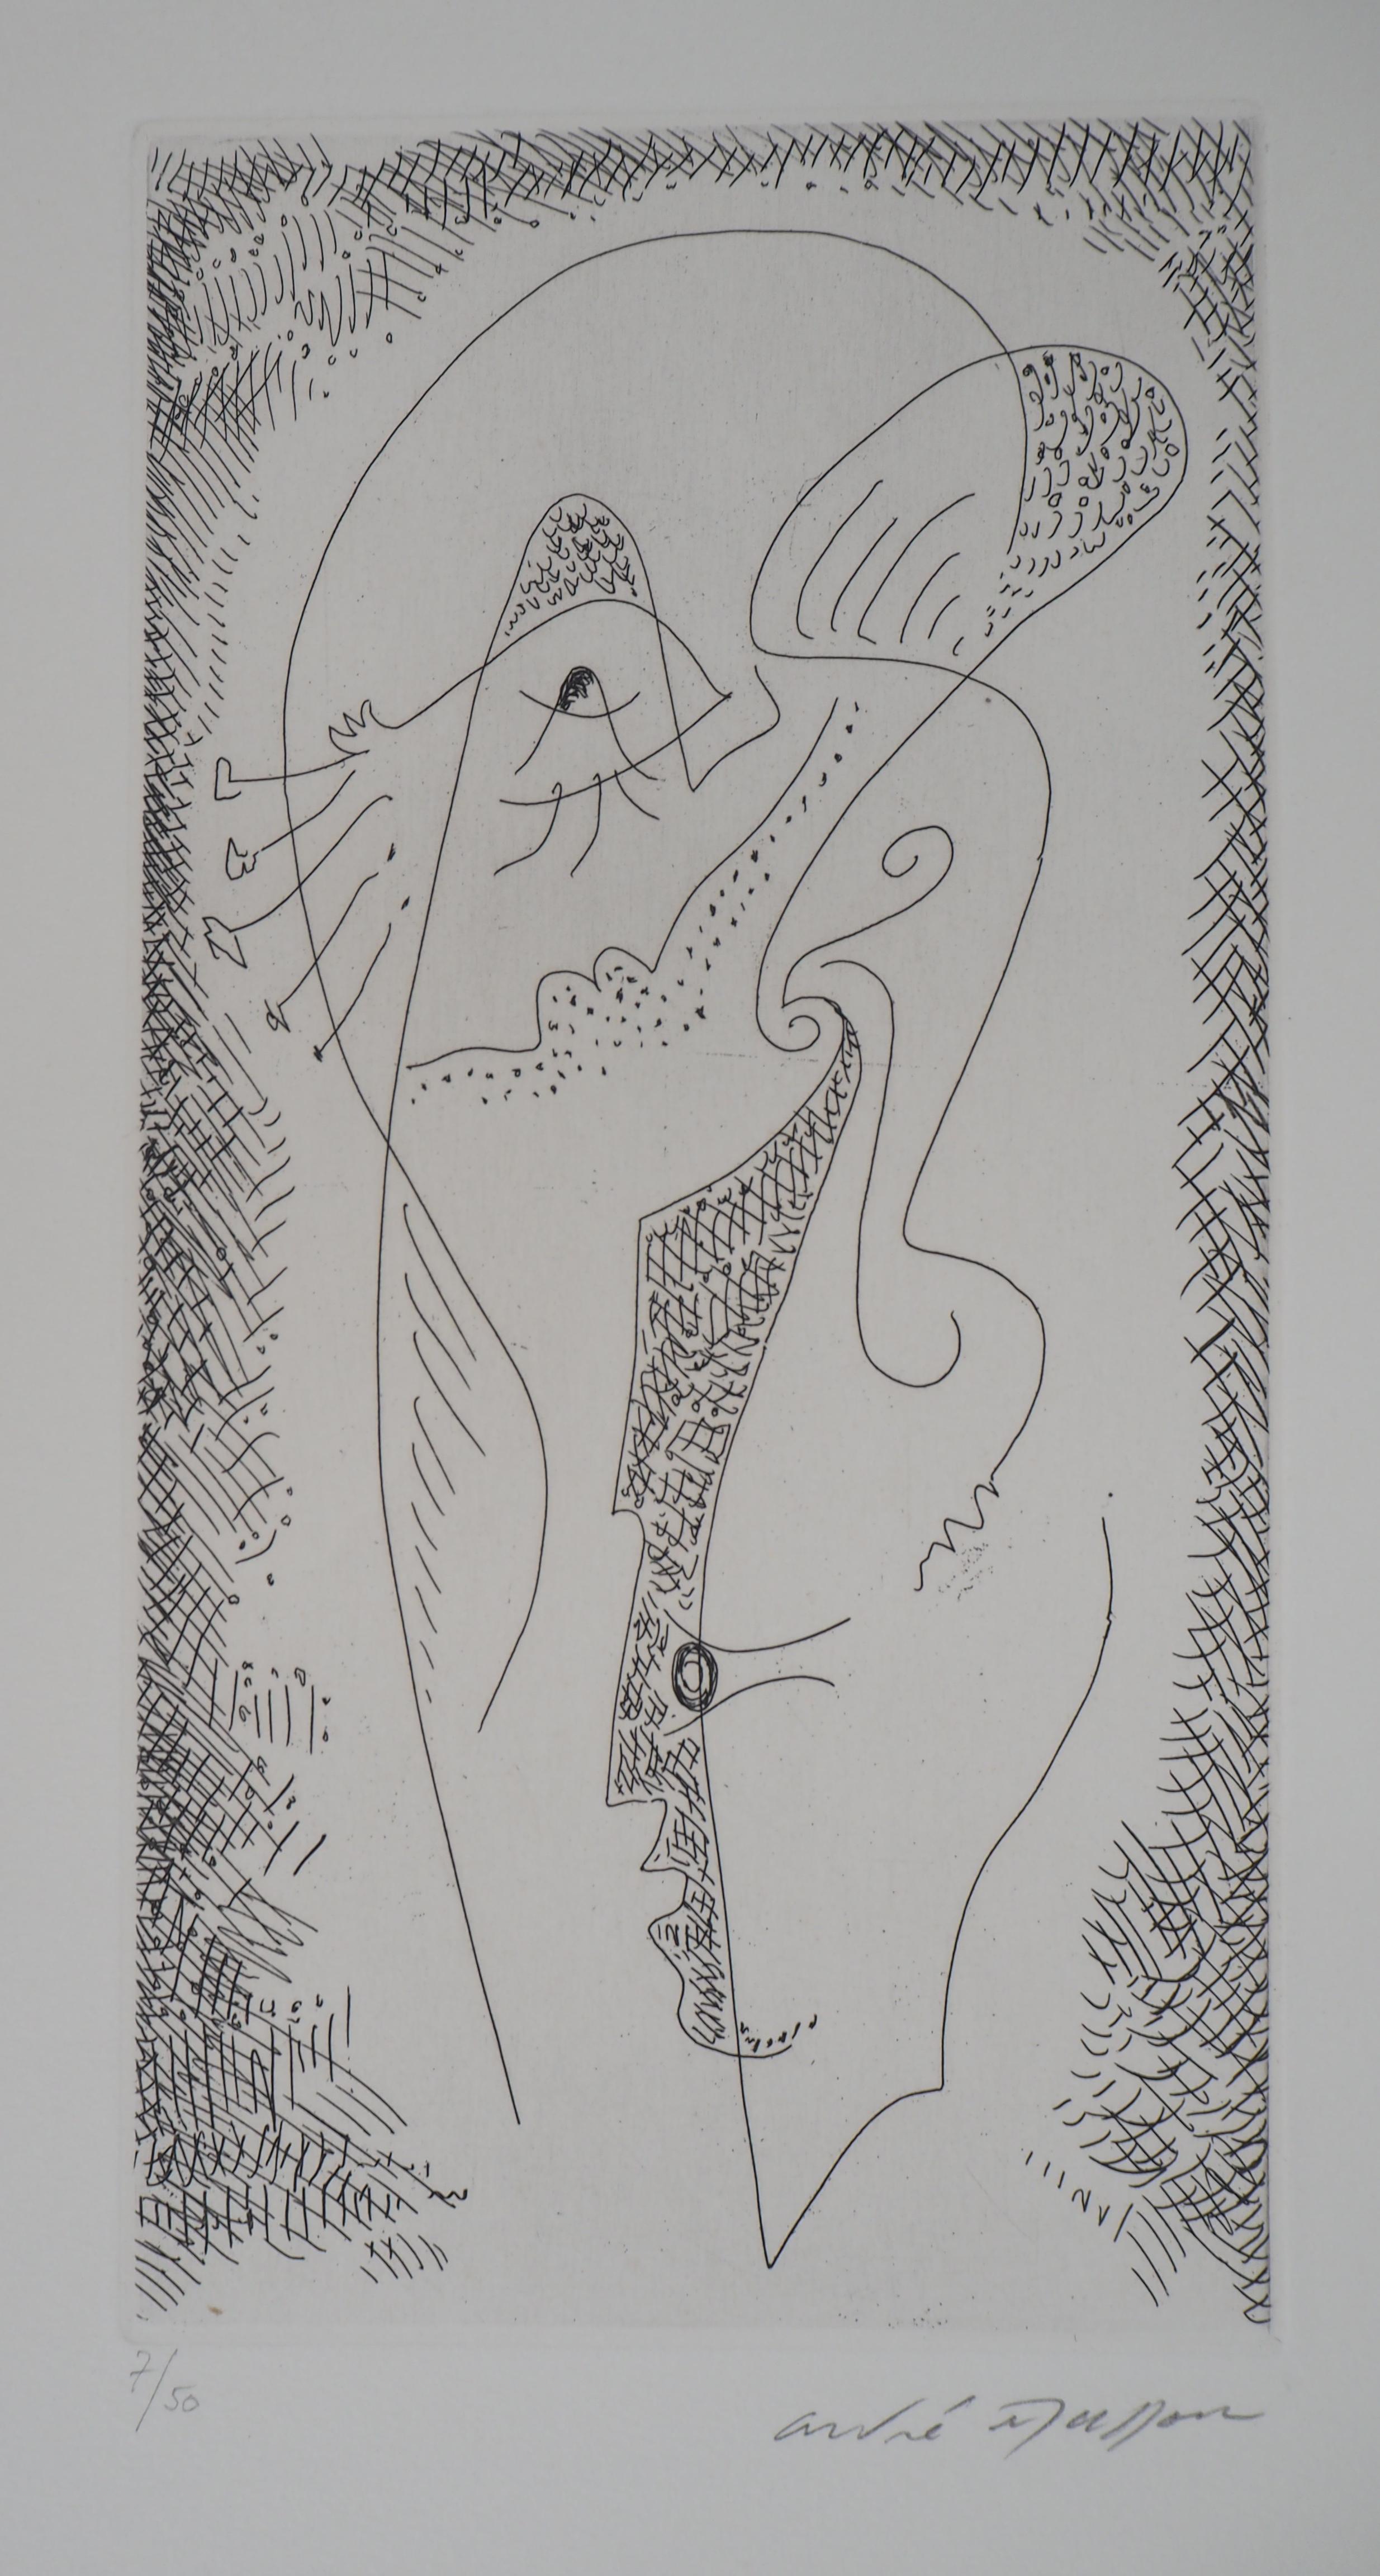 André Masson Figurative Print - The Surrealist Dream - Original handsigned etching - Ltd /50